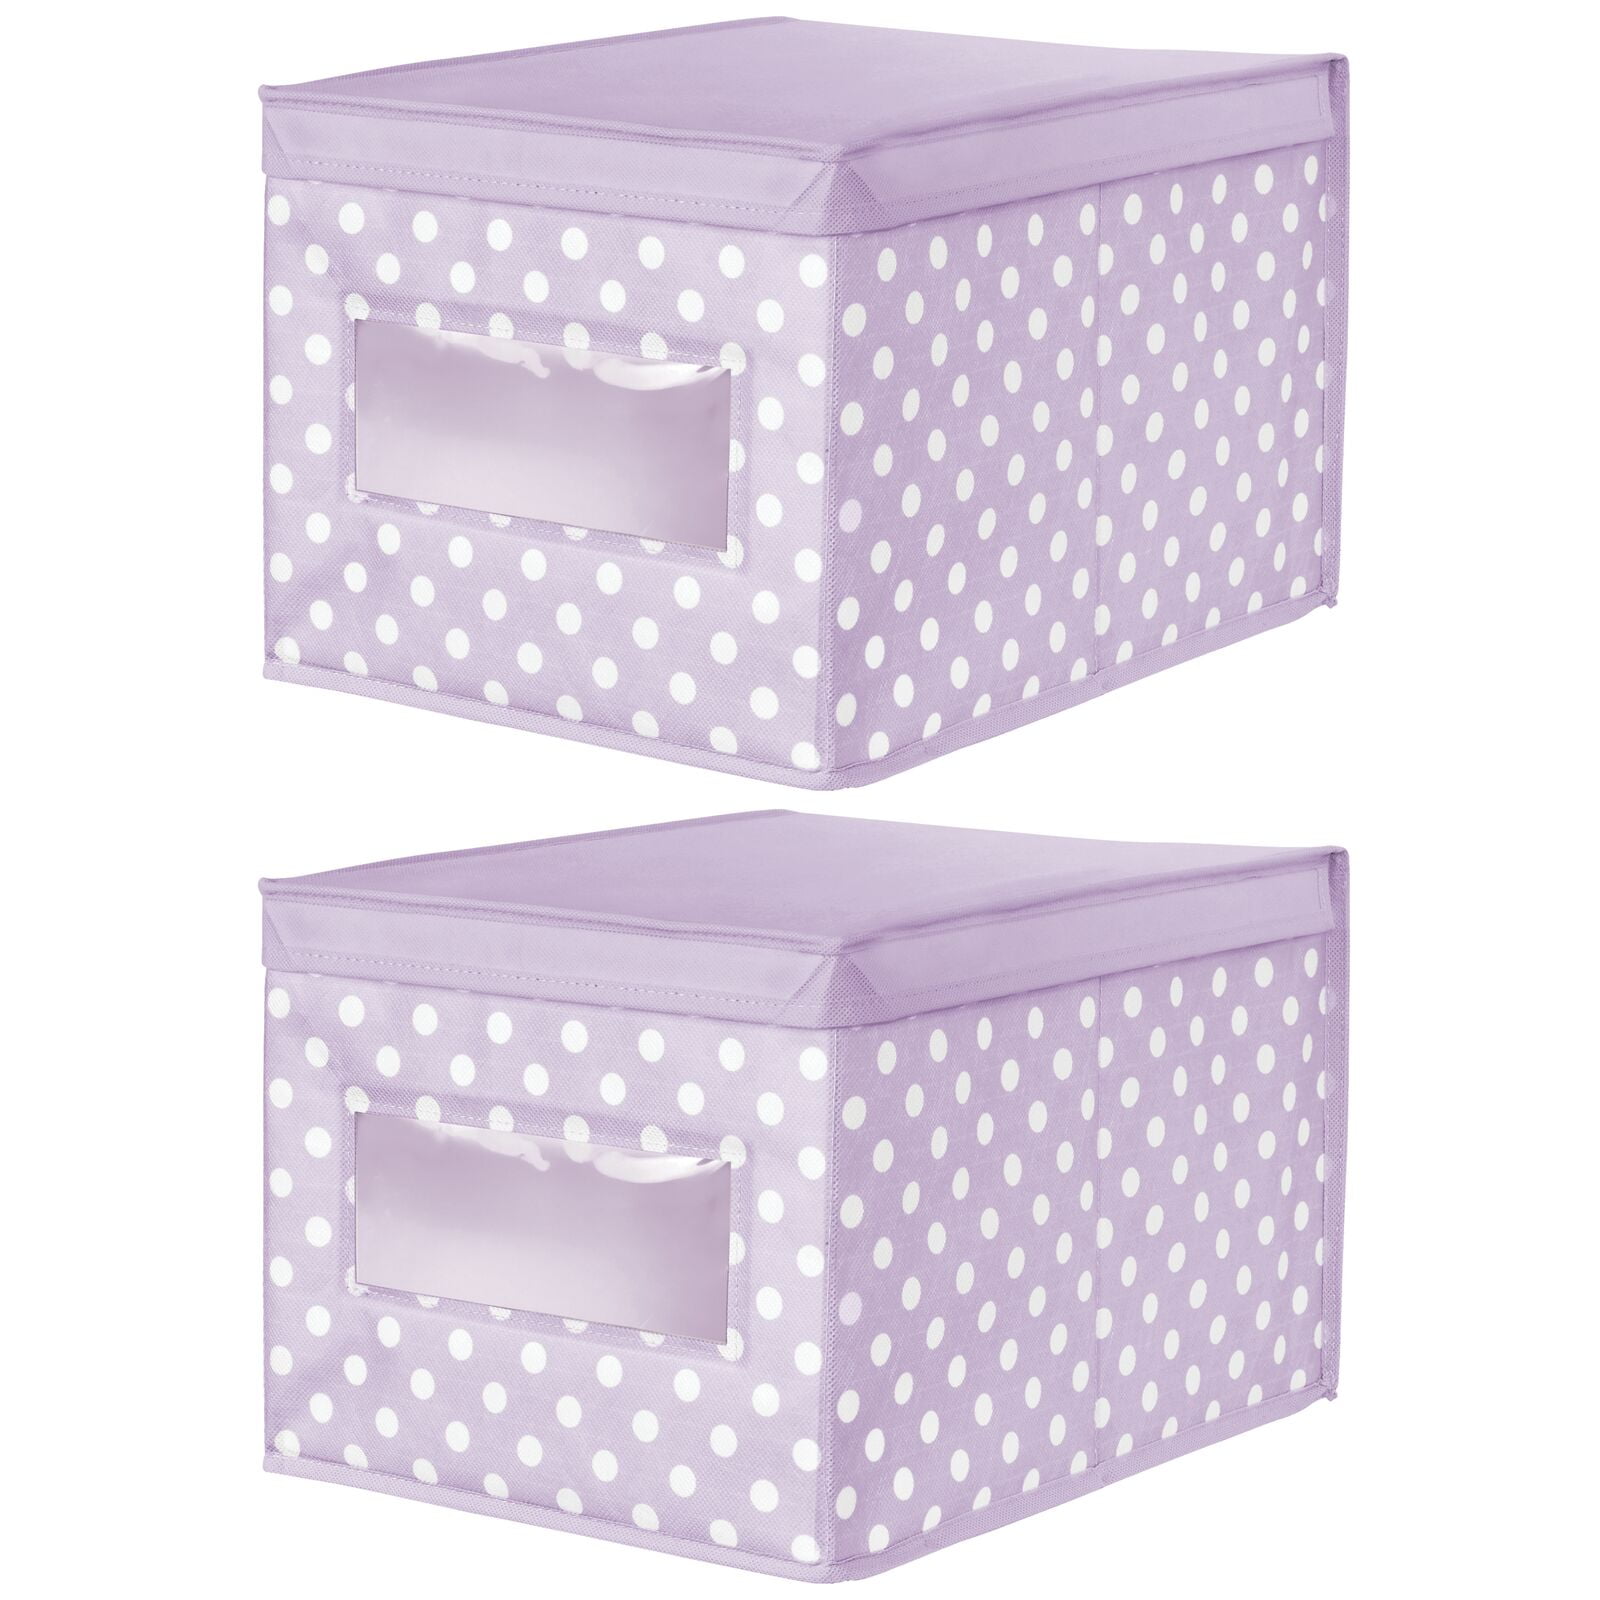 4 Pack Blush Pink/White mDesign Kids Fabric Closet Storage Organizer Cube Bin 